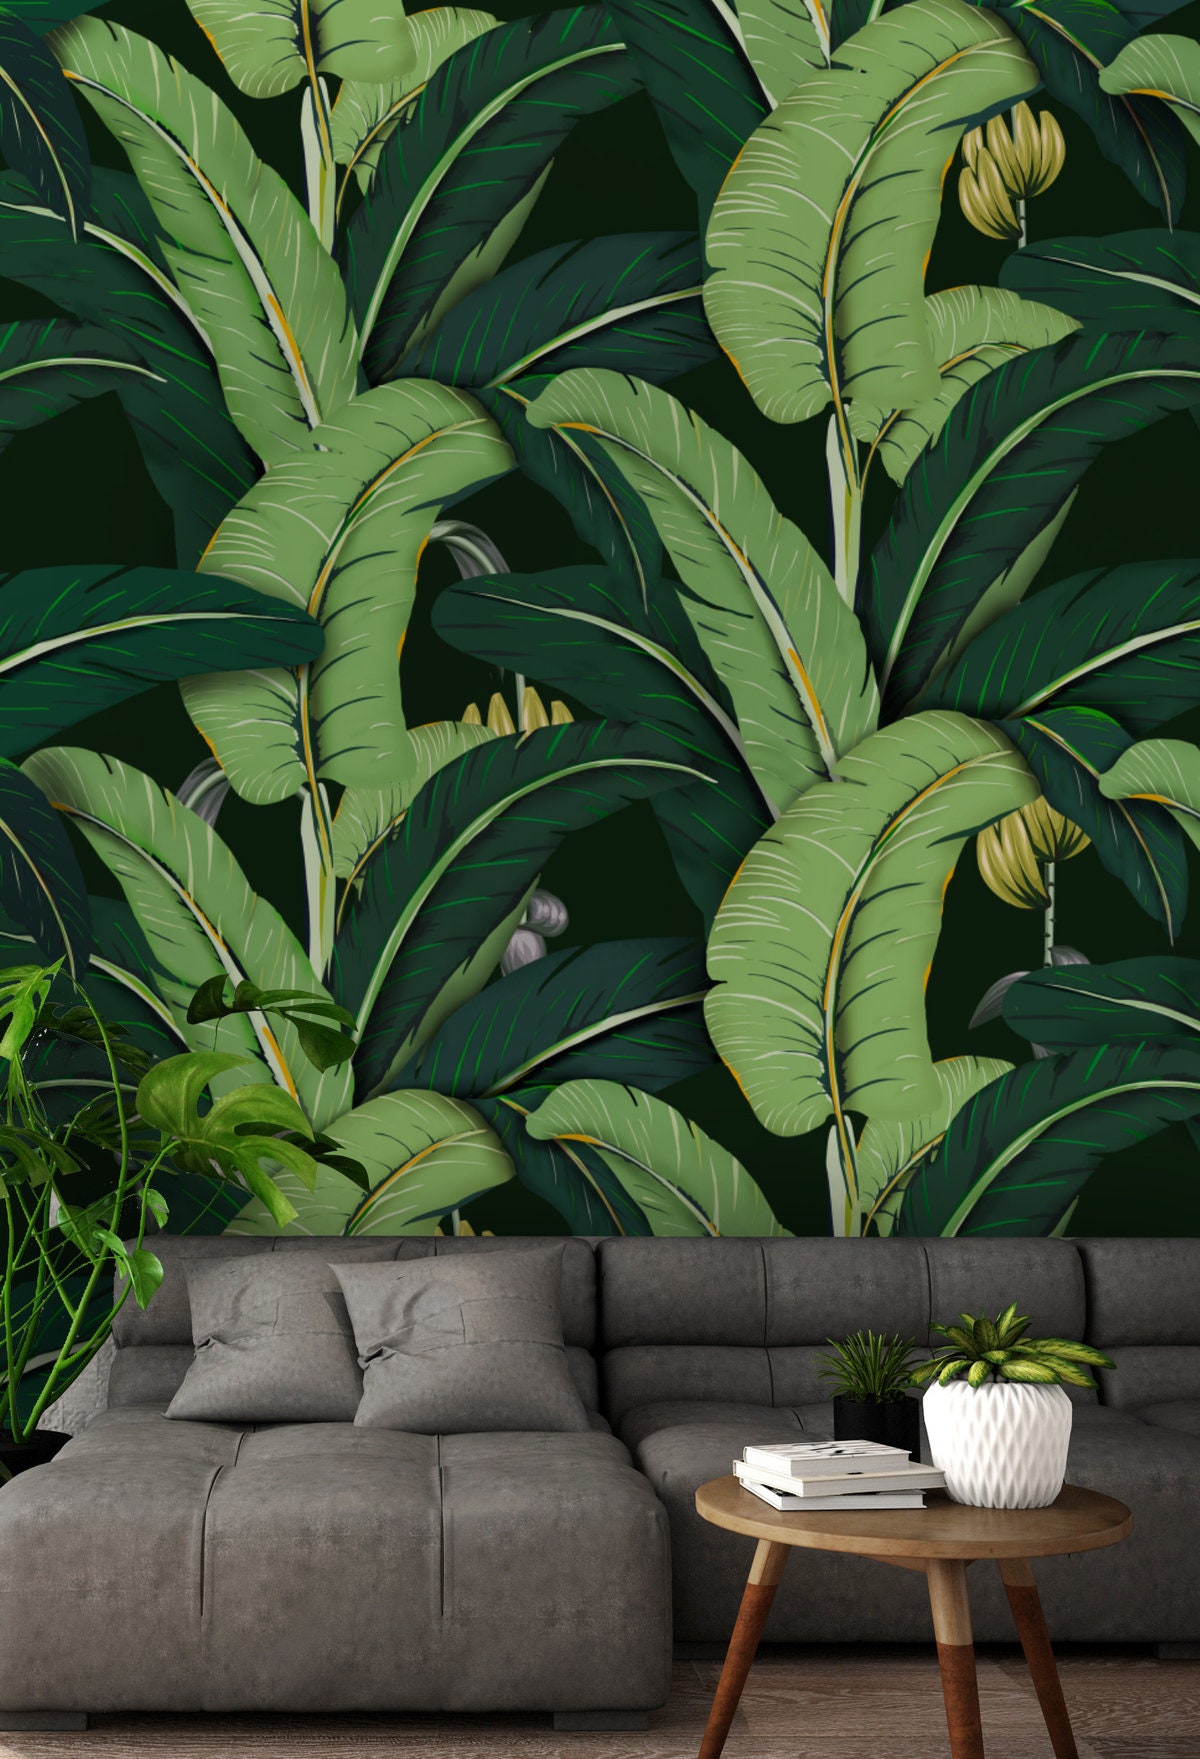 Banana Leaf Wallpaper Self Adhesive Peel and Stick Tropical | Etsy